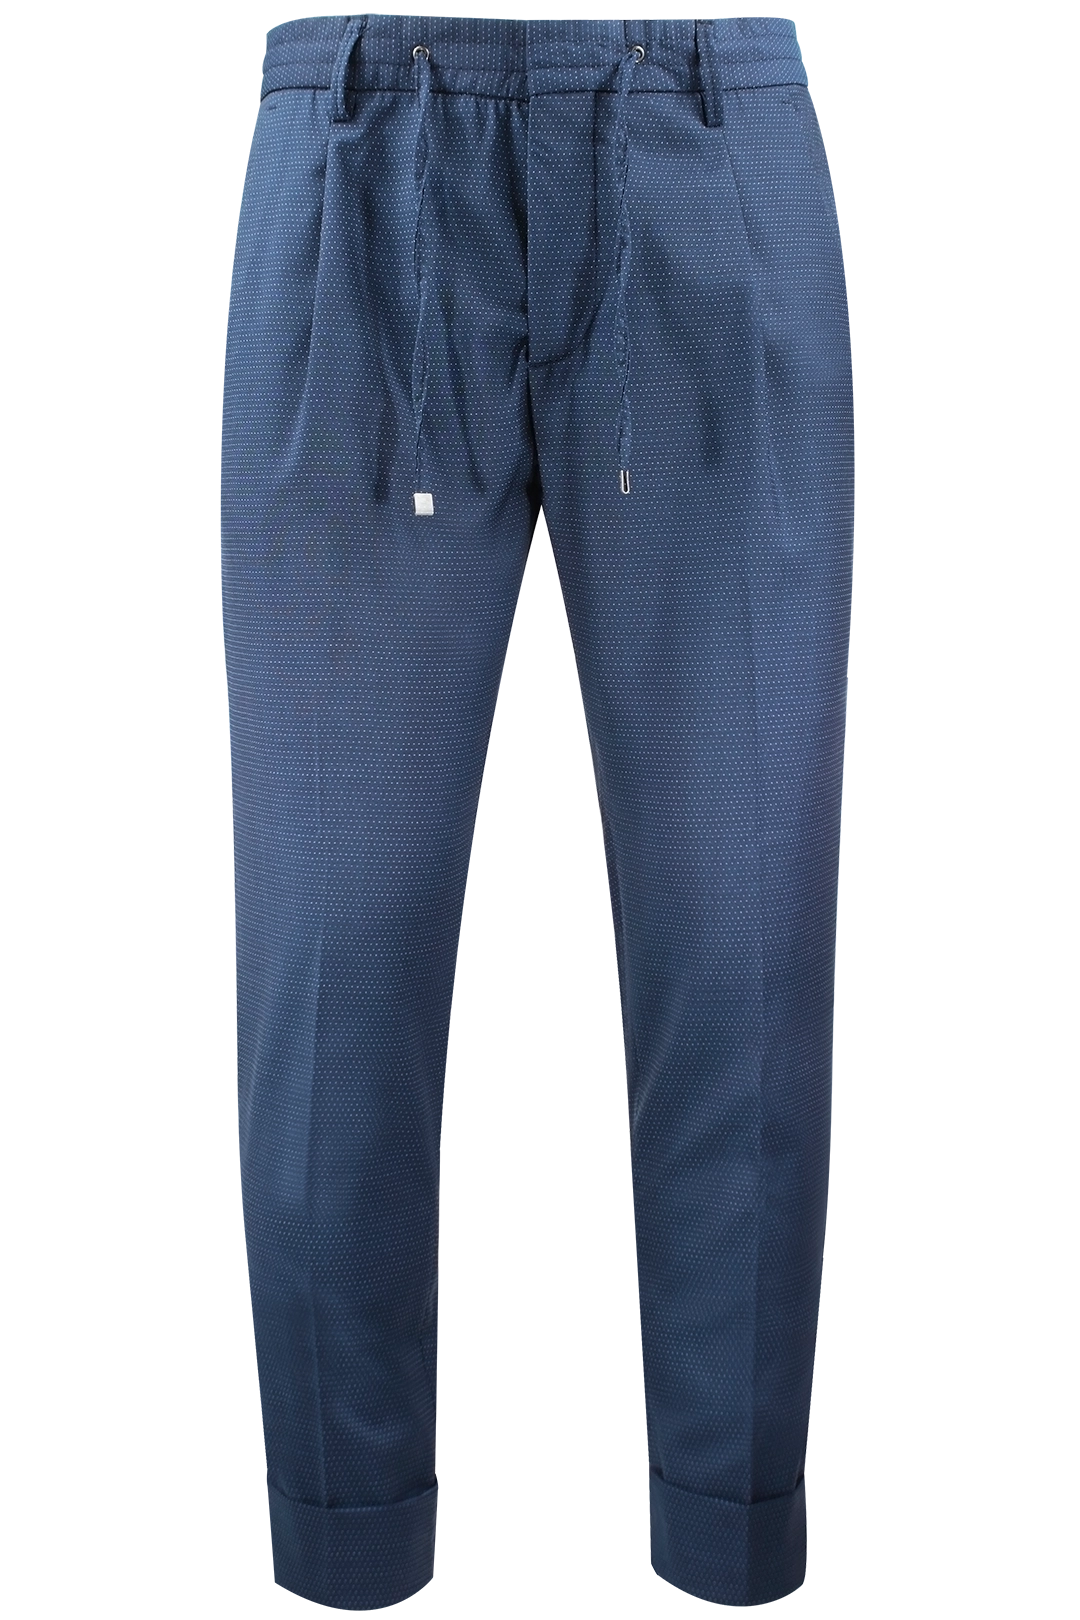 Pantalone pince coulisse lana blu micro pois bianchi